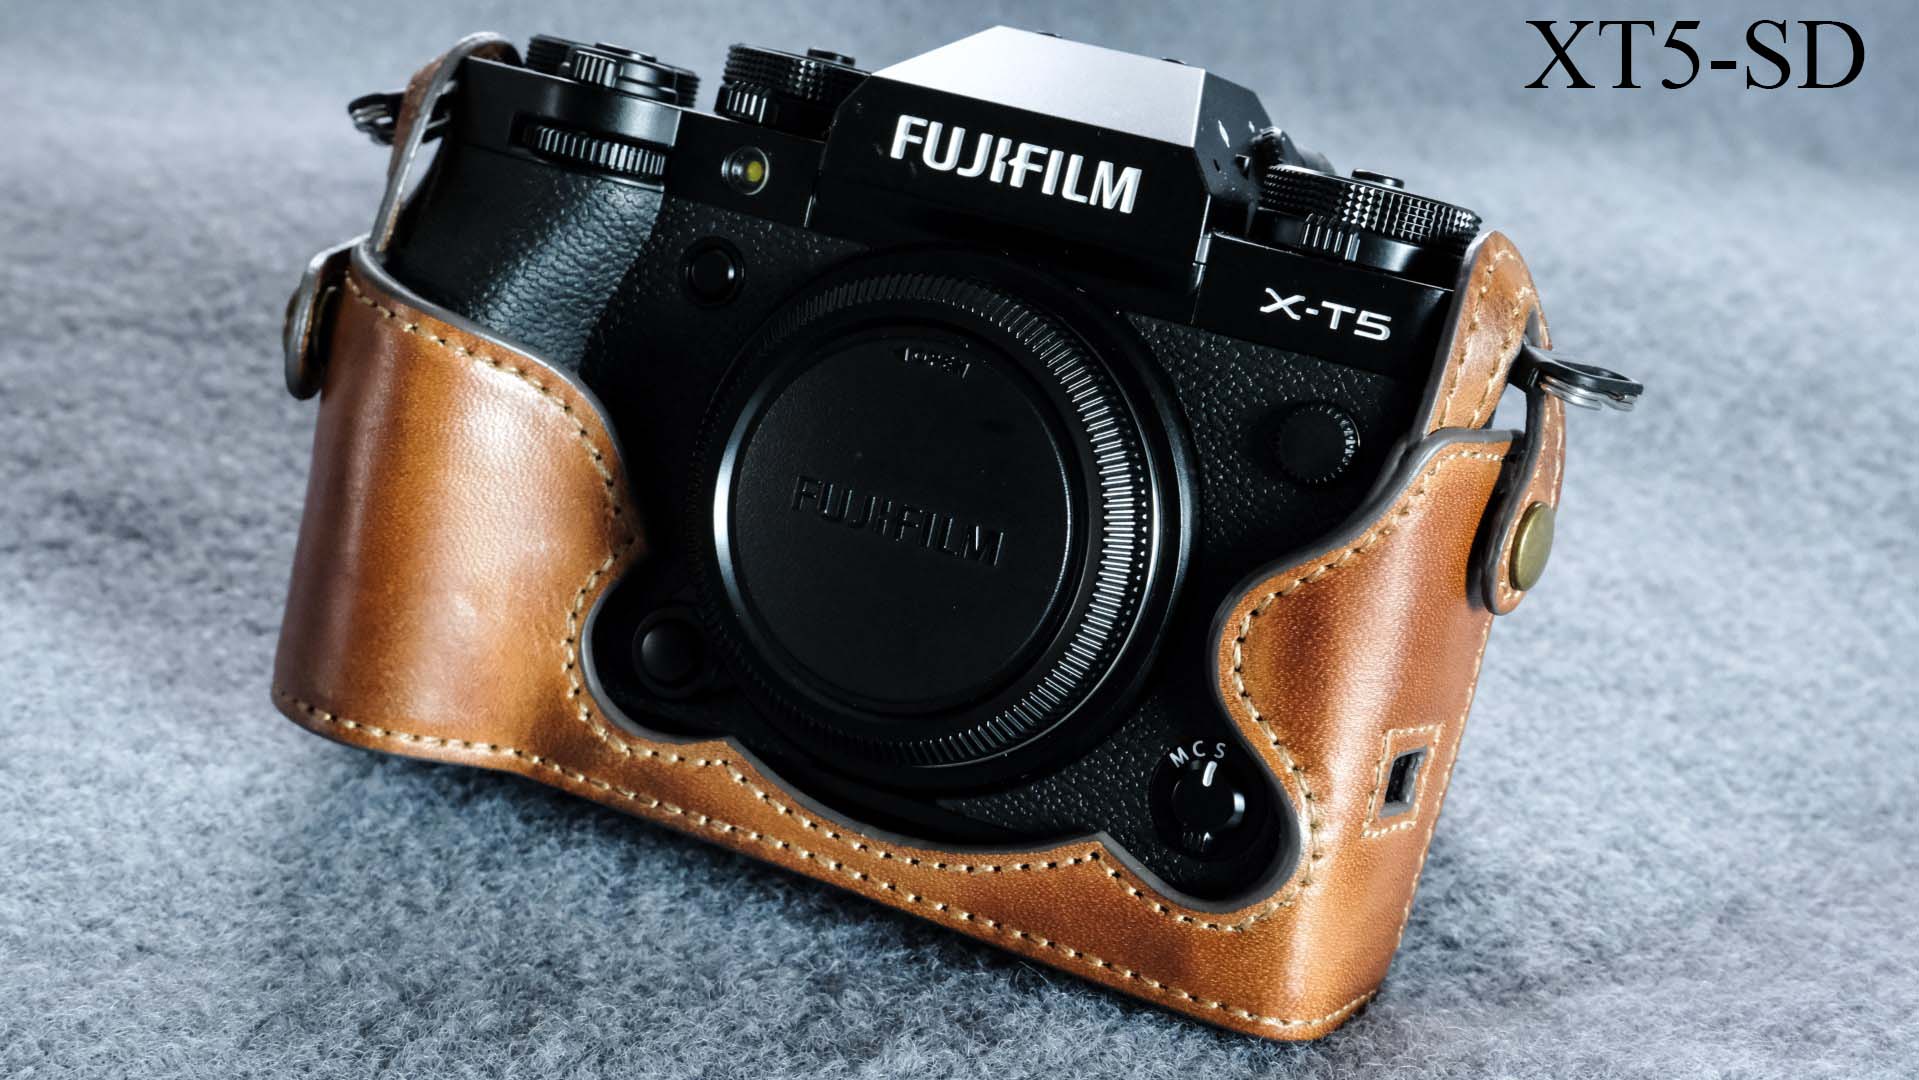 Rieibi Fuji XT5 Case - PU Leather Half Case for Fujifilm X-T5 Digital  Camera - Body Protective Grip Case for Fuji XT5 X-T5, Green, Beauty Case